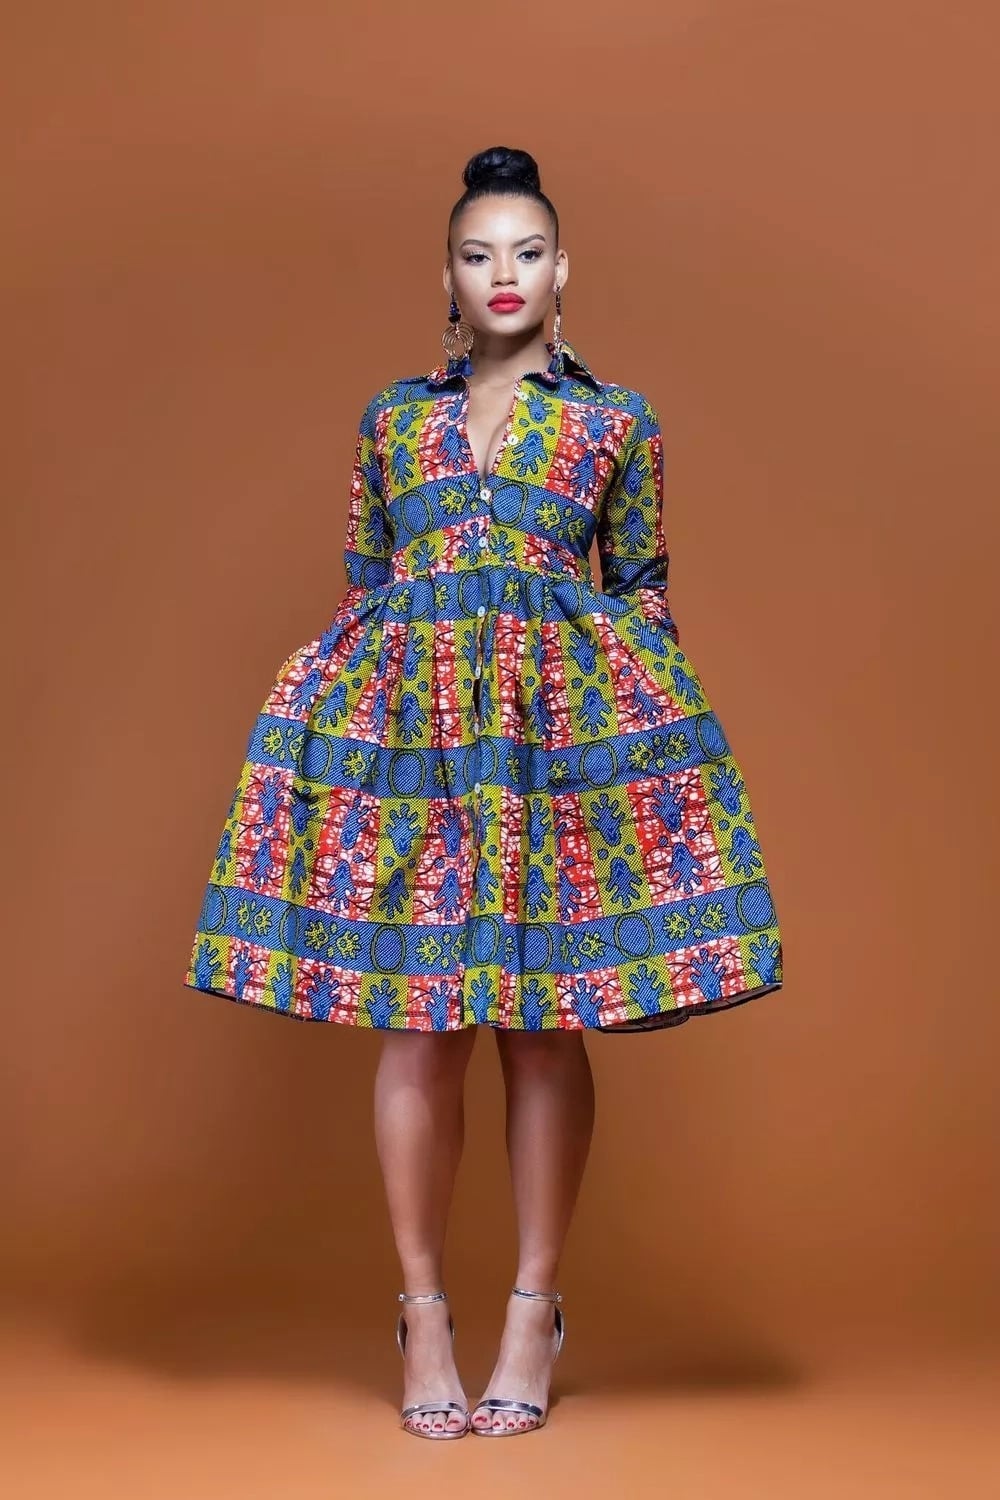 Modern African dresses styles